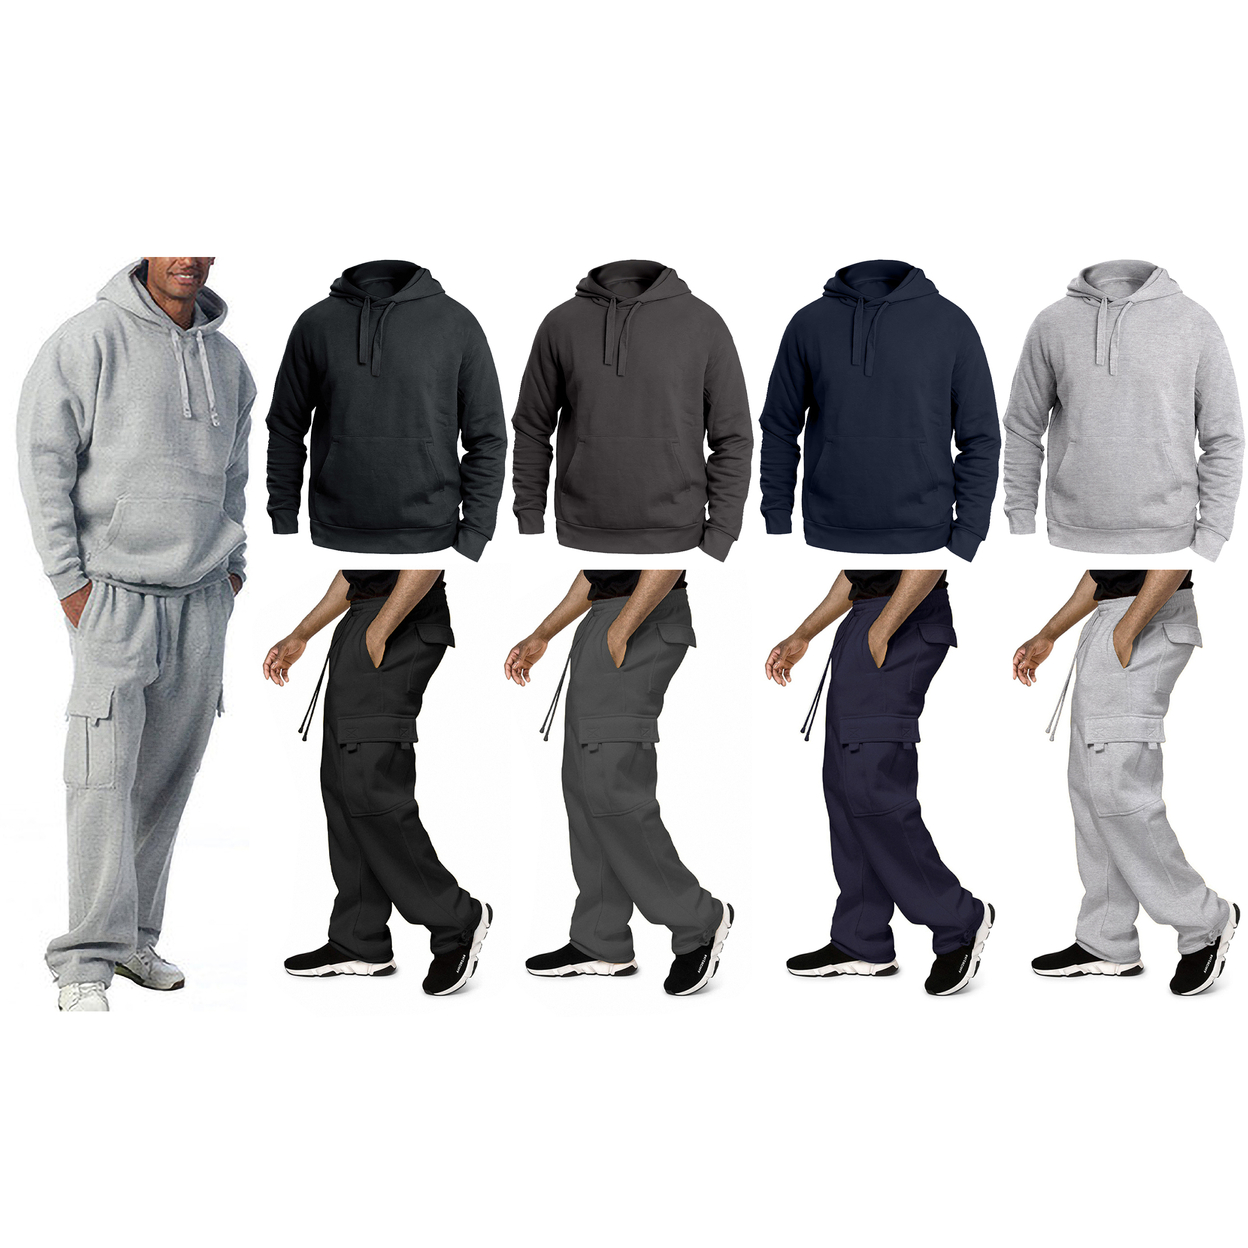 2-Pack: Men's Big & Tall Winter Warm Cozy Athletic Fleece Lined Multi-Pocket Cargo Sweatsuit - Navy, X-large